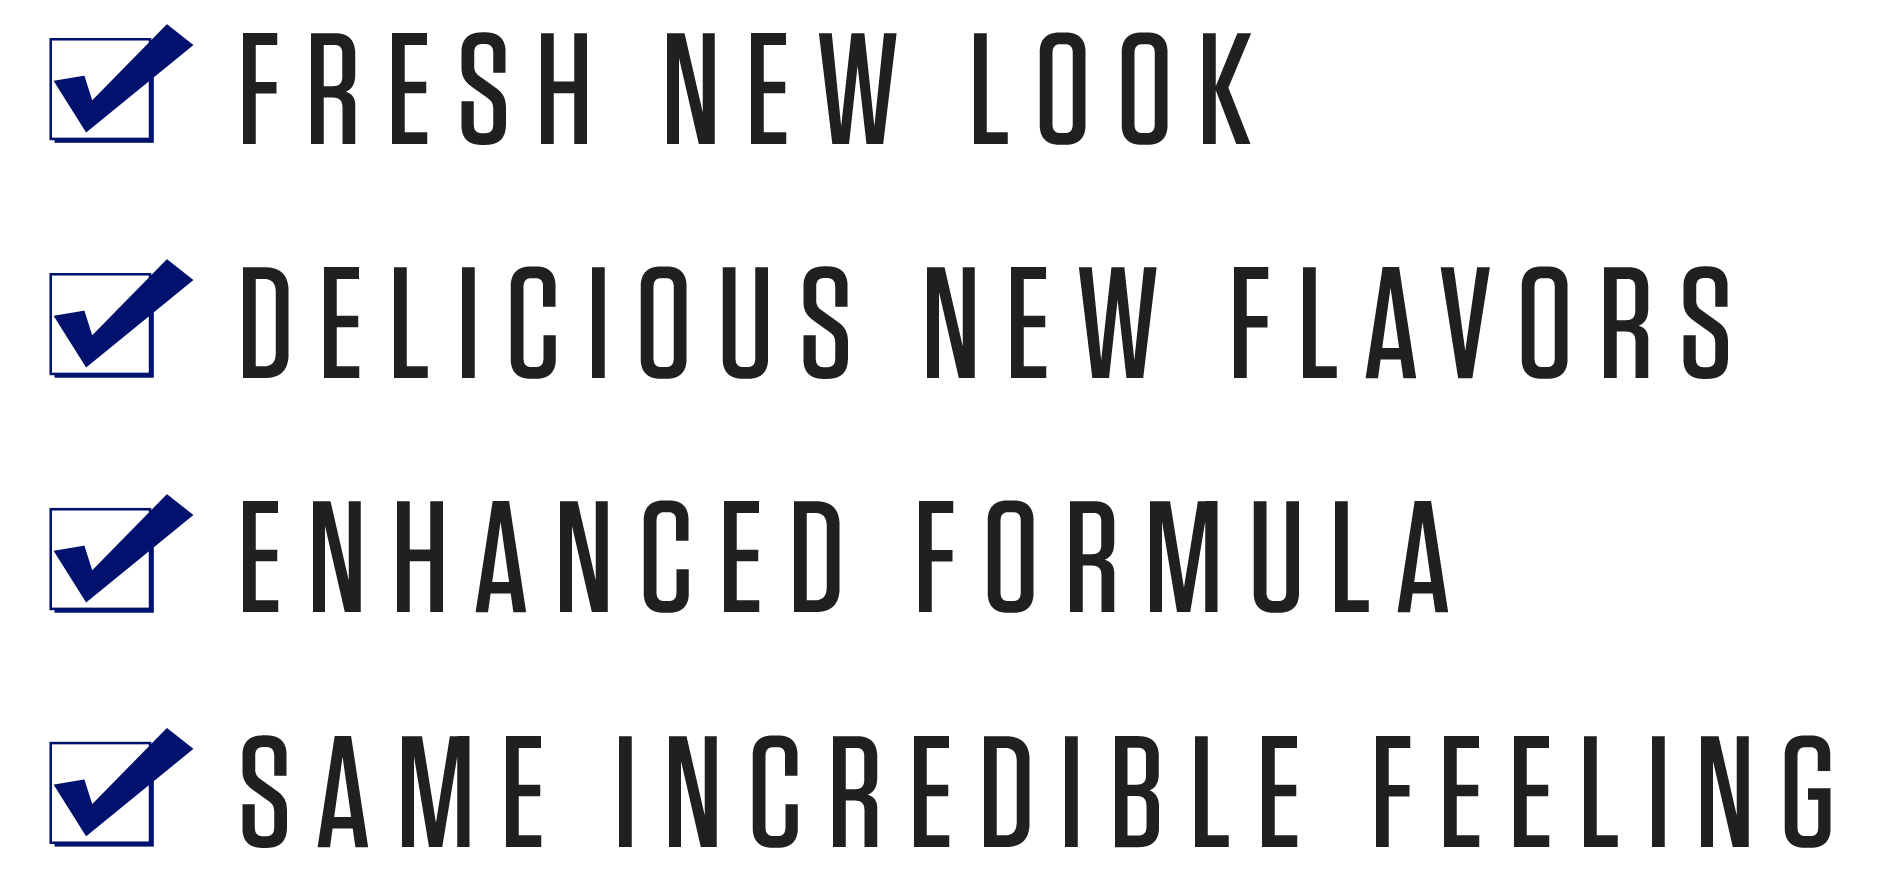 Fresh new look, check, delicious new flavors, check, enhanced formula, check, same incredible feeling, check